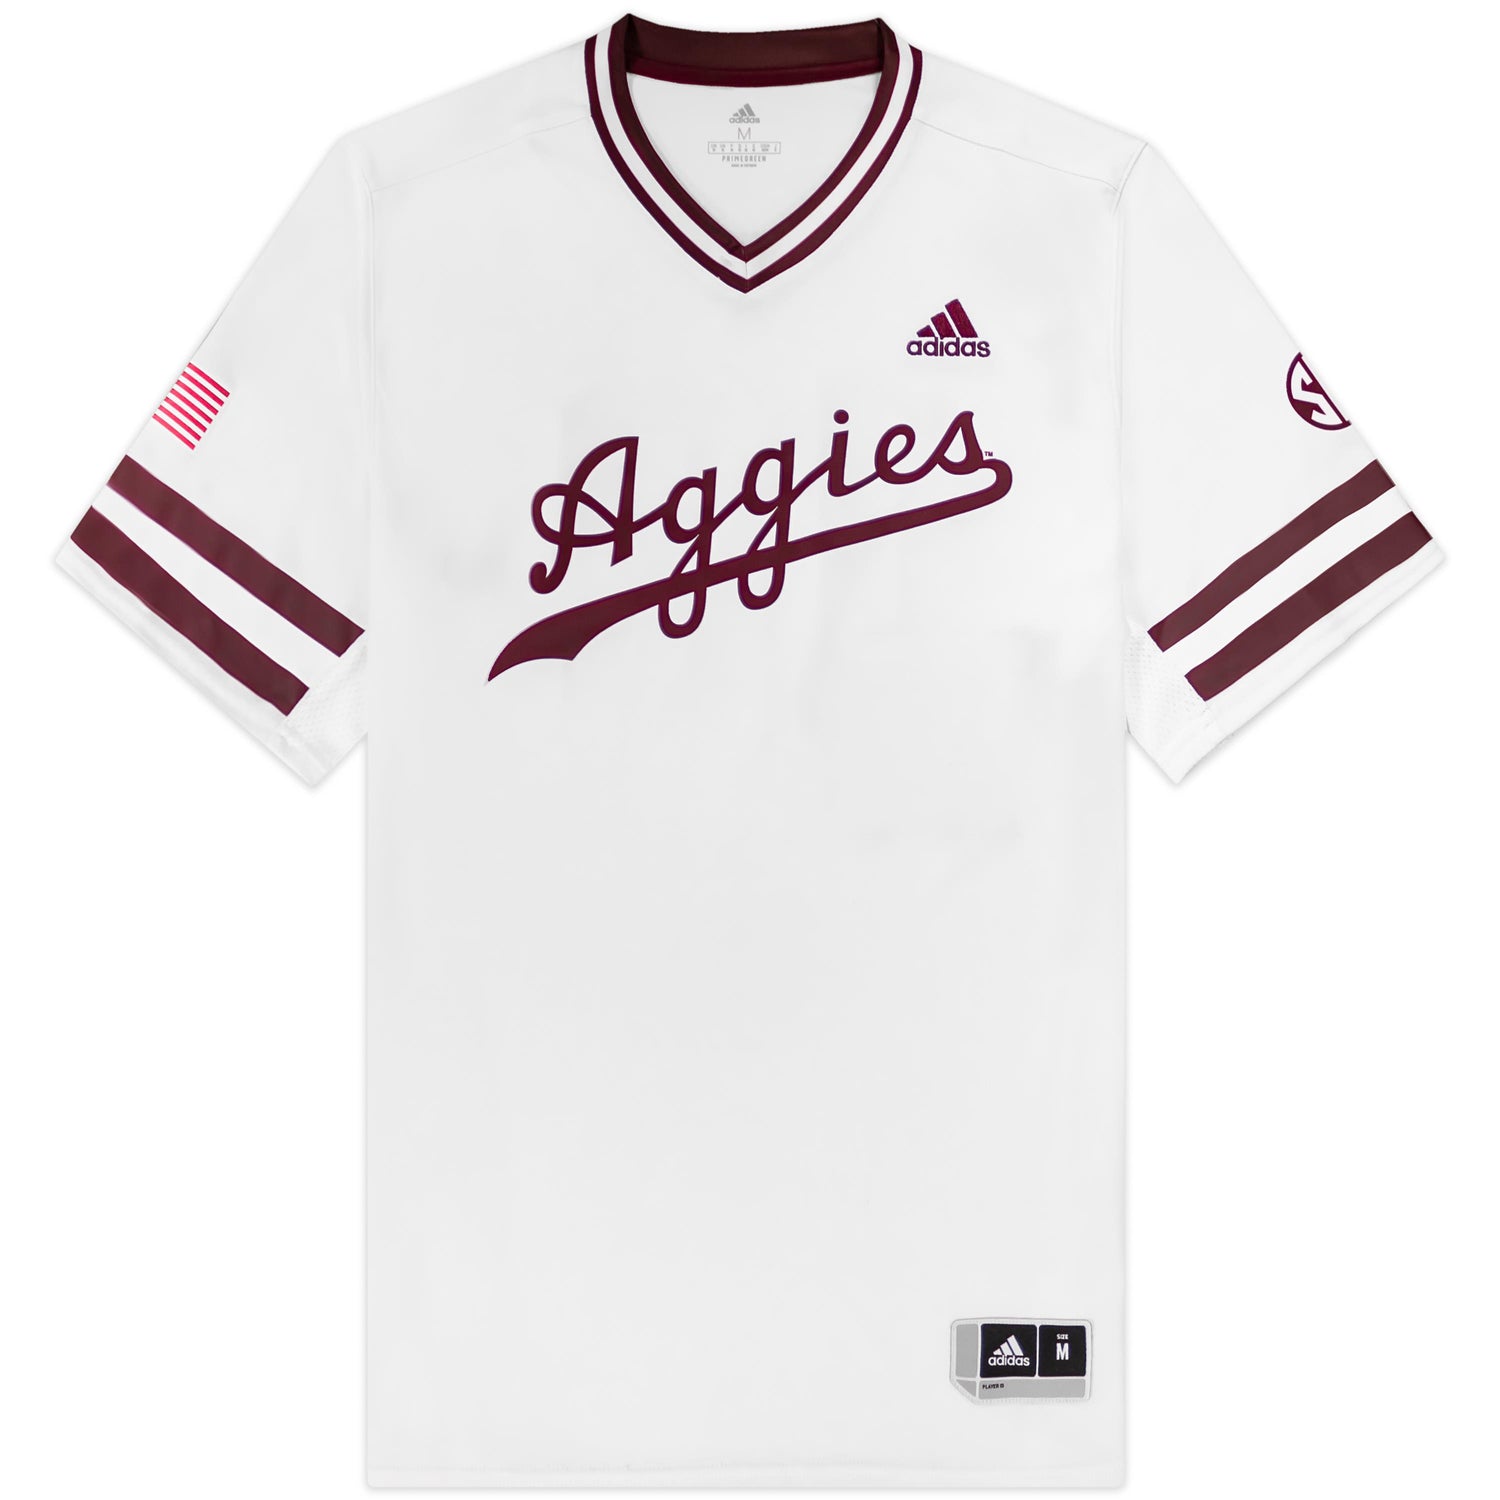 Adidas Men's White Script Replica Baseball Jersey - Maroon U